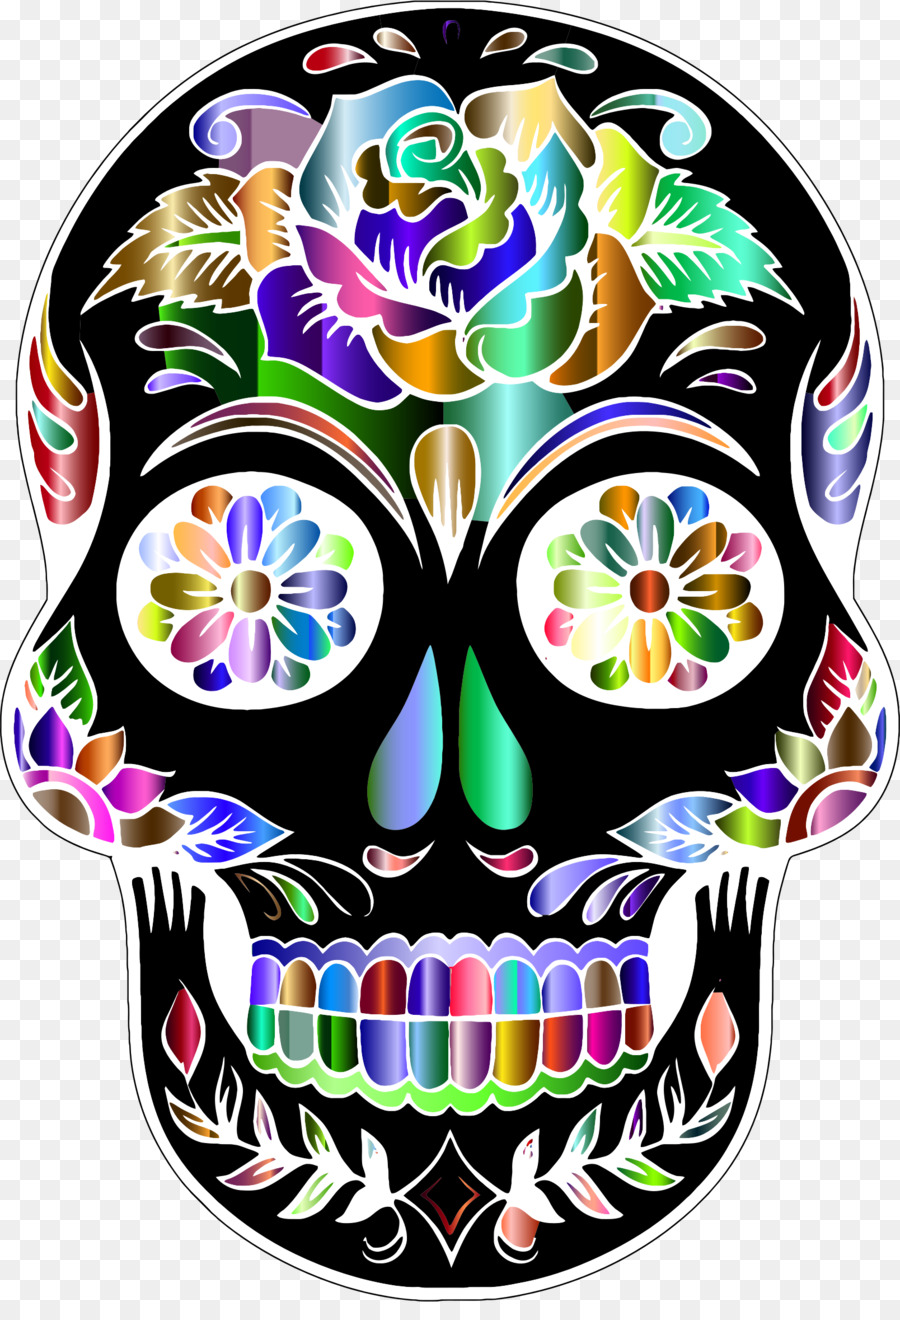 Calavera Skull Silhouette Clip art - skulls png download - 1608*2326 - Free Transparent Calavera png Download.